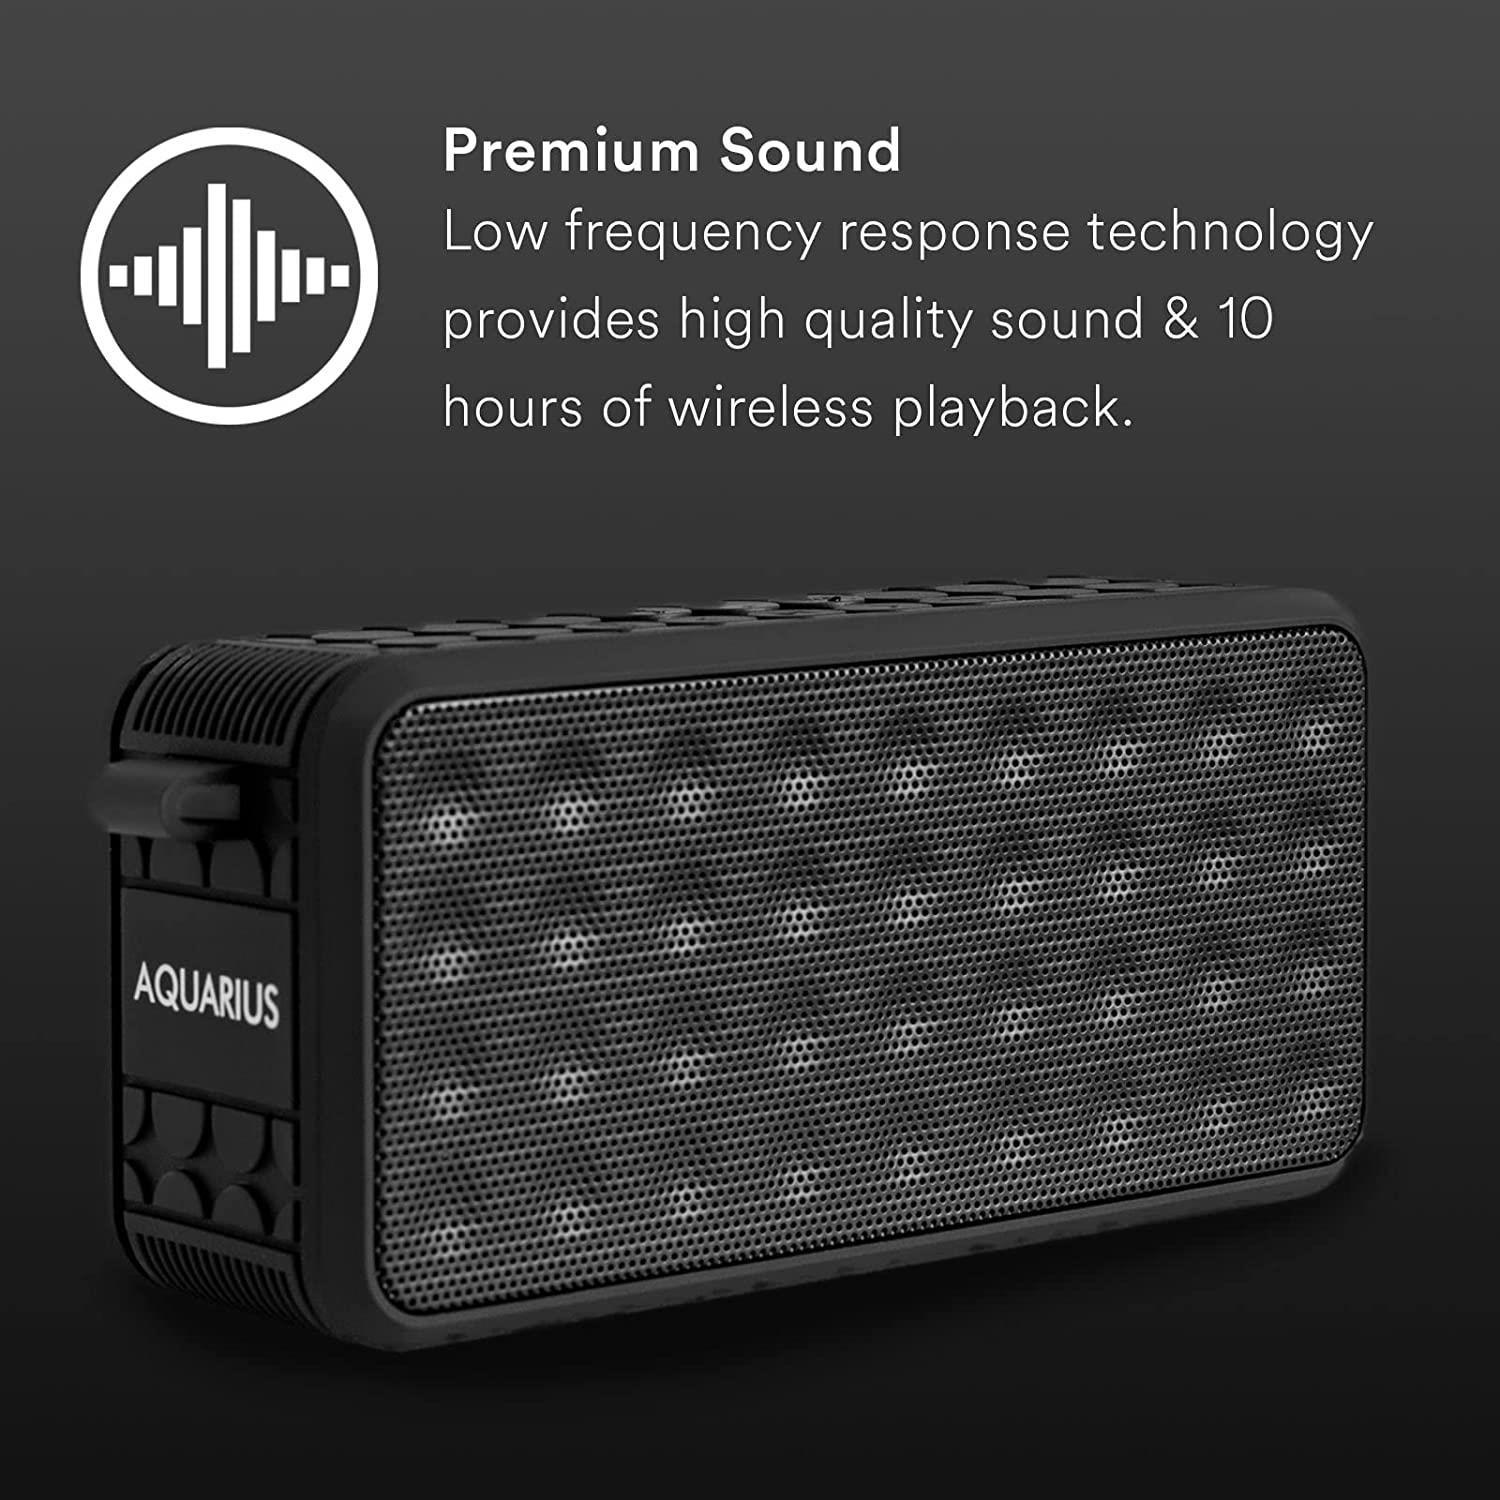 Aquarius Portable & Waterproof Bluetooth Speaker - High Quality Sound & Bass, Black